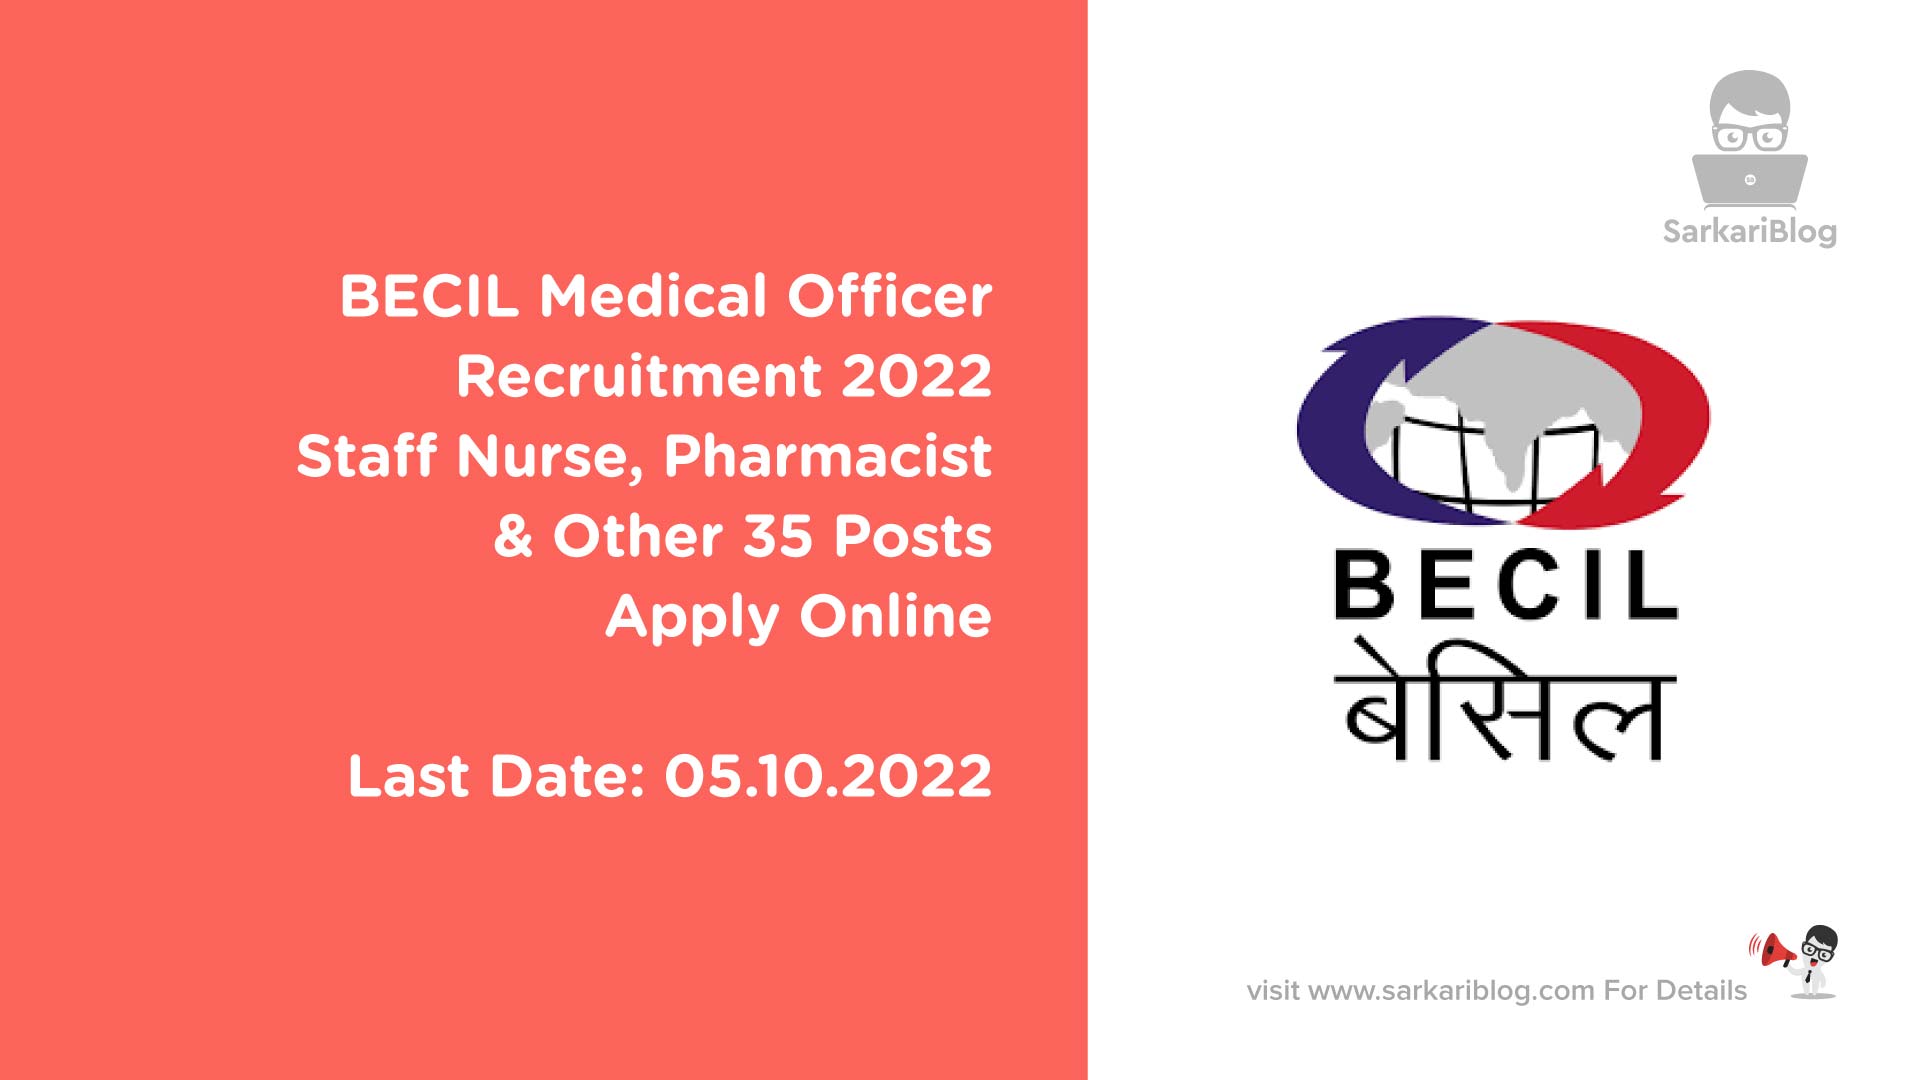 BECIL Medical Officer Recruitment 2022